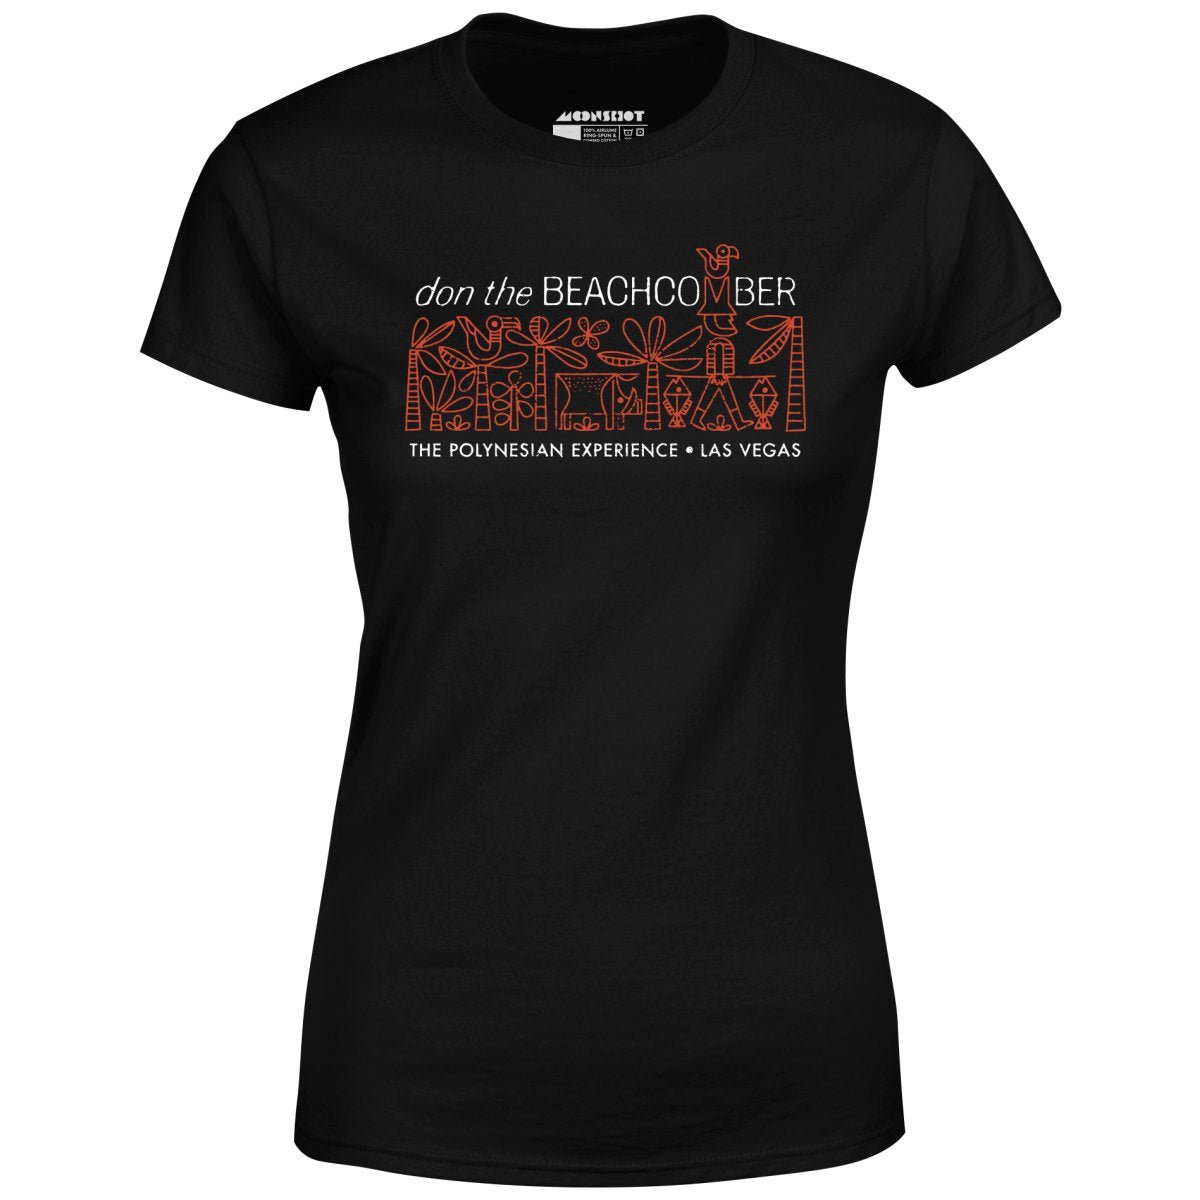 Don the Beachcomber - Las Vegas, NV - Vintage Tiki Bar - Women's T-Shirt